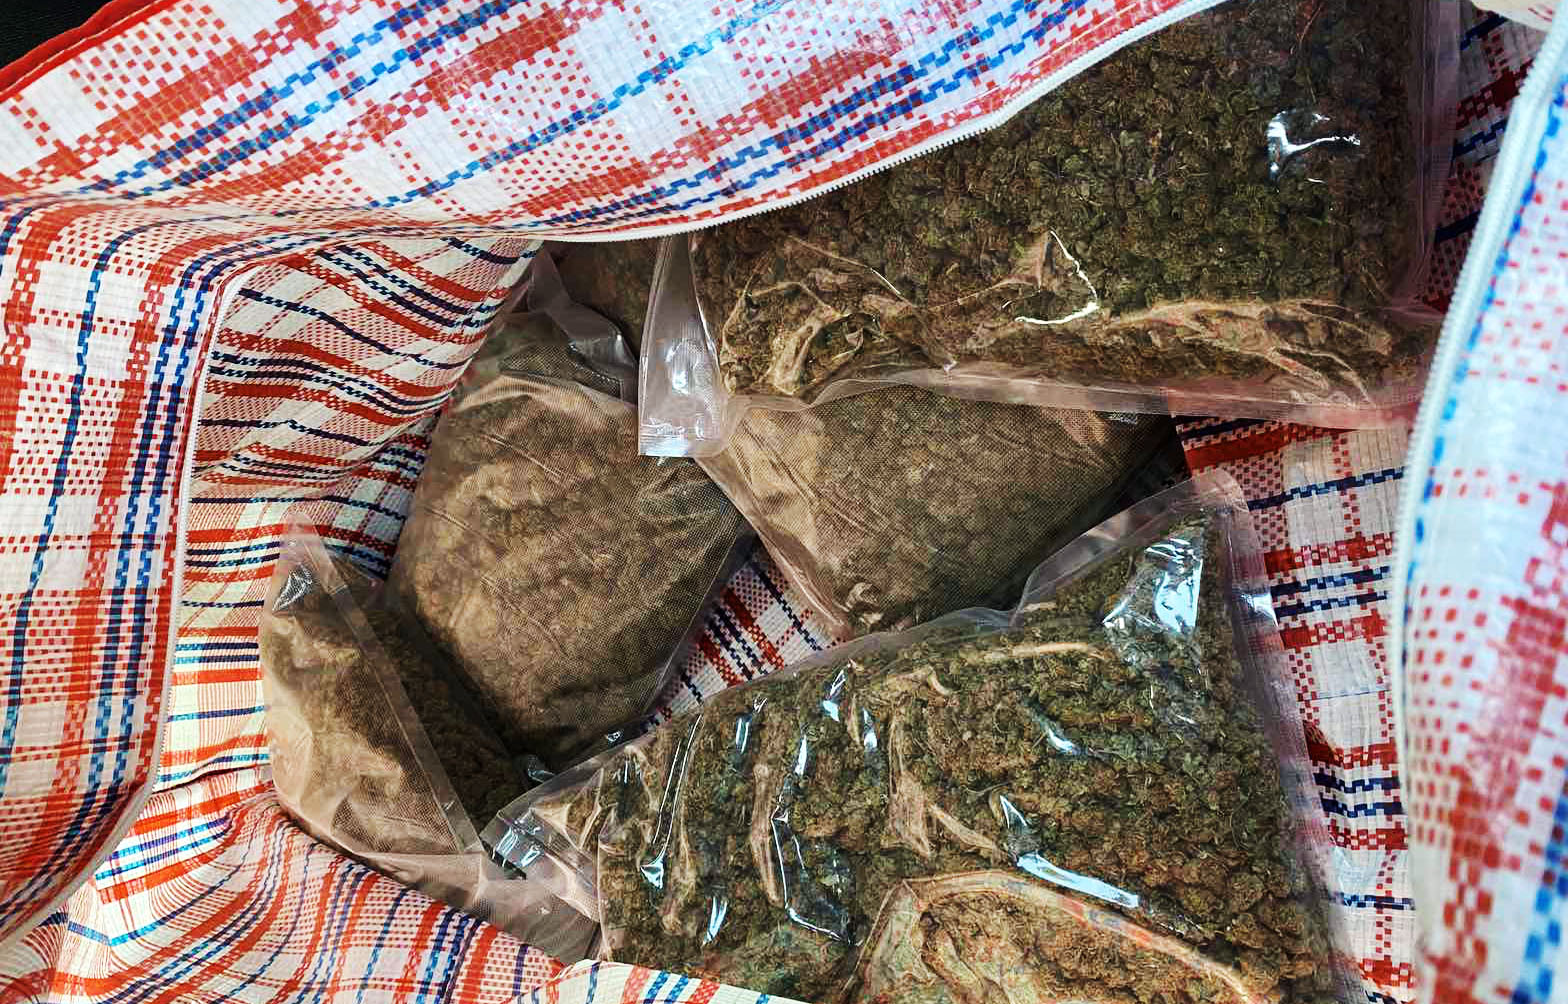 Zaplenjeno tri kilograma marihuane